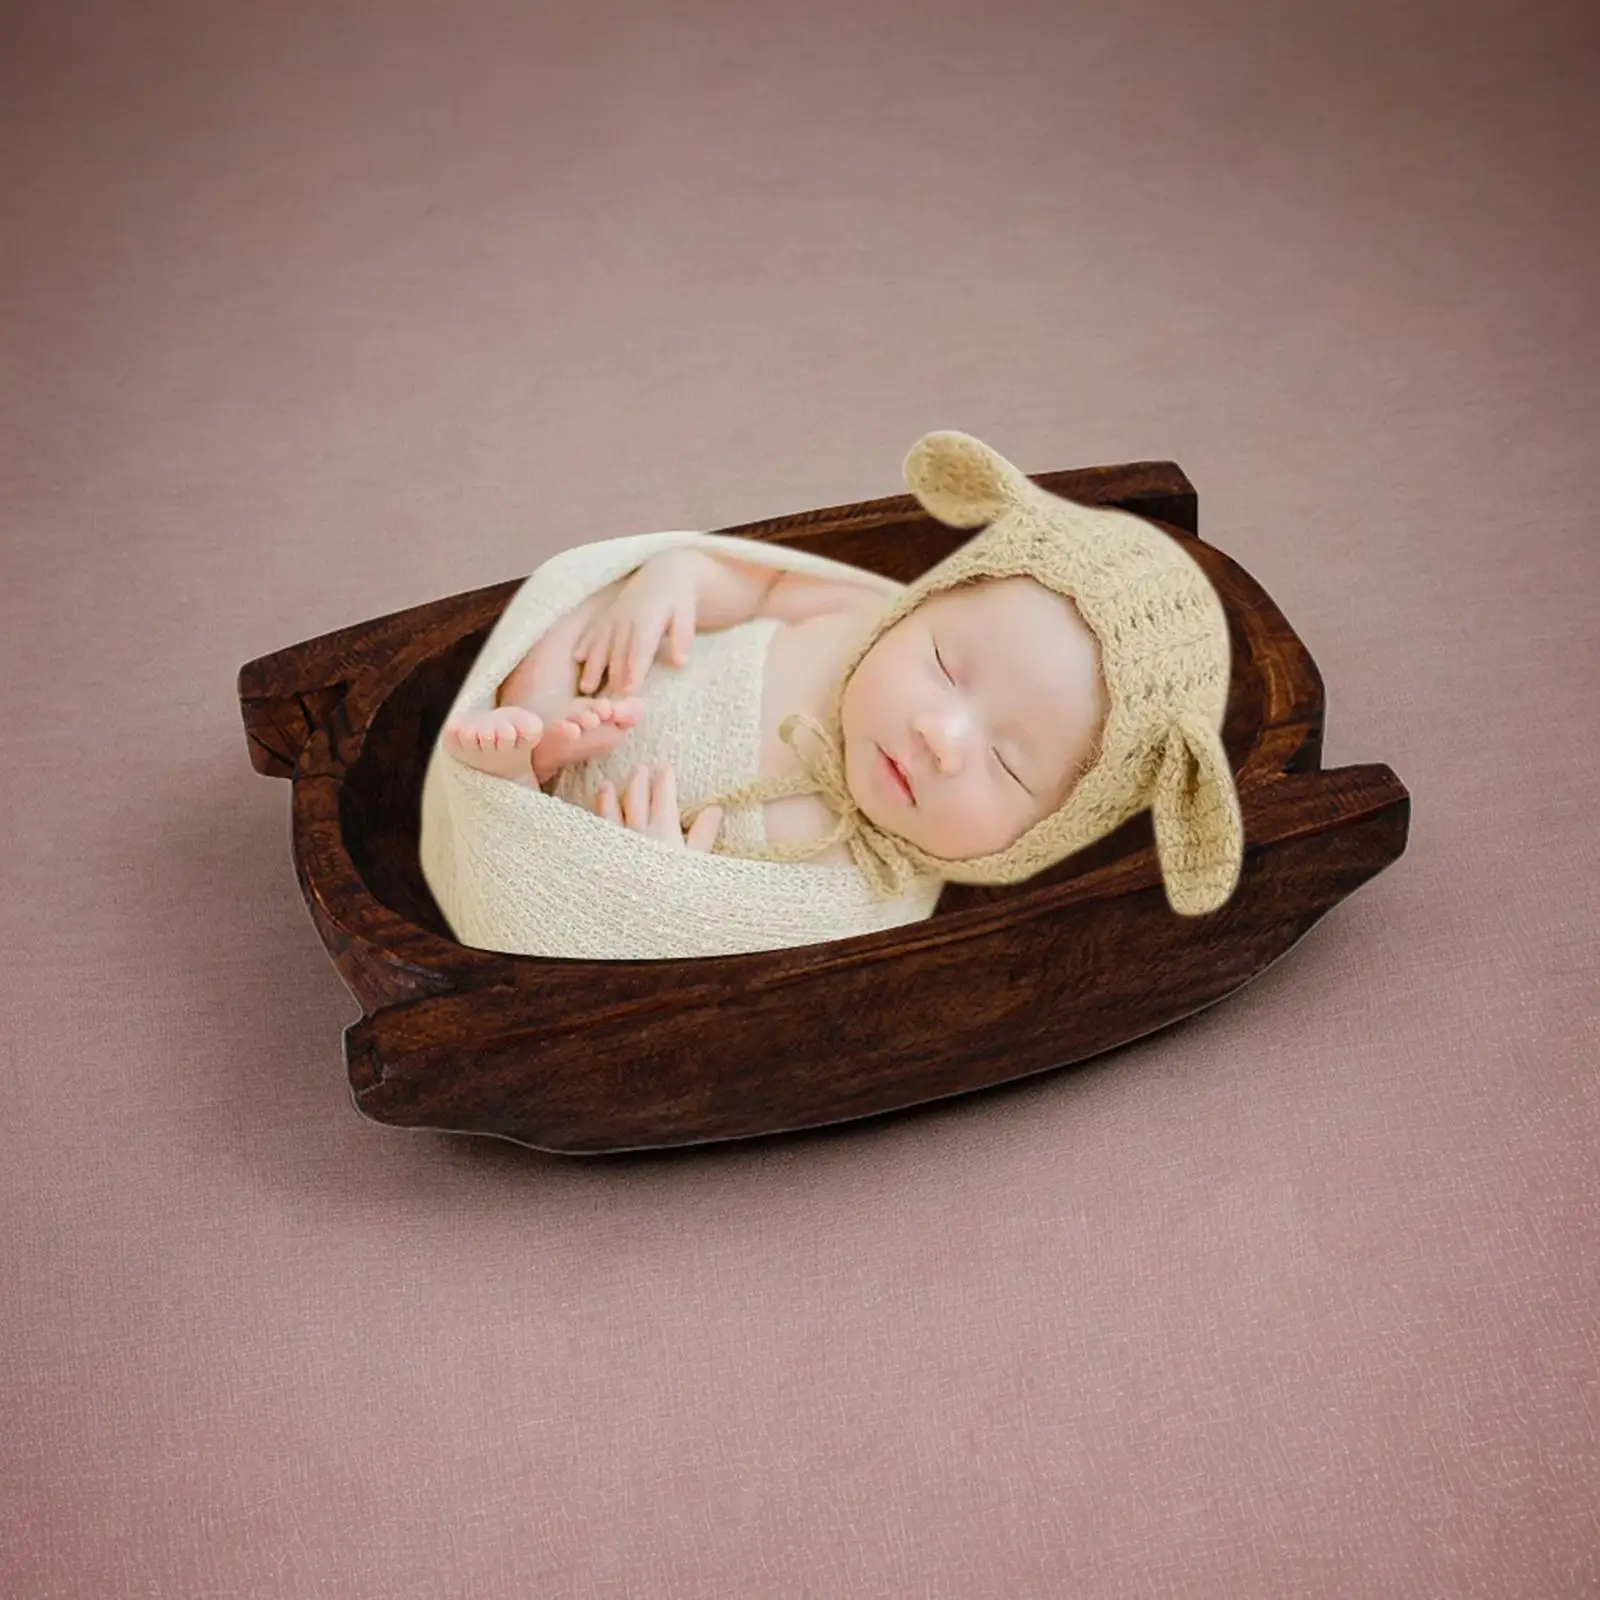 Newborn Infants Photography Props Decoration Wooden Prop Posing Sofa Baskets for Newborn Baby Shower Baby Girls Boys Birthday